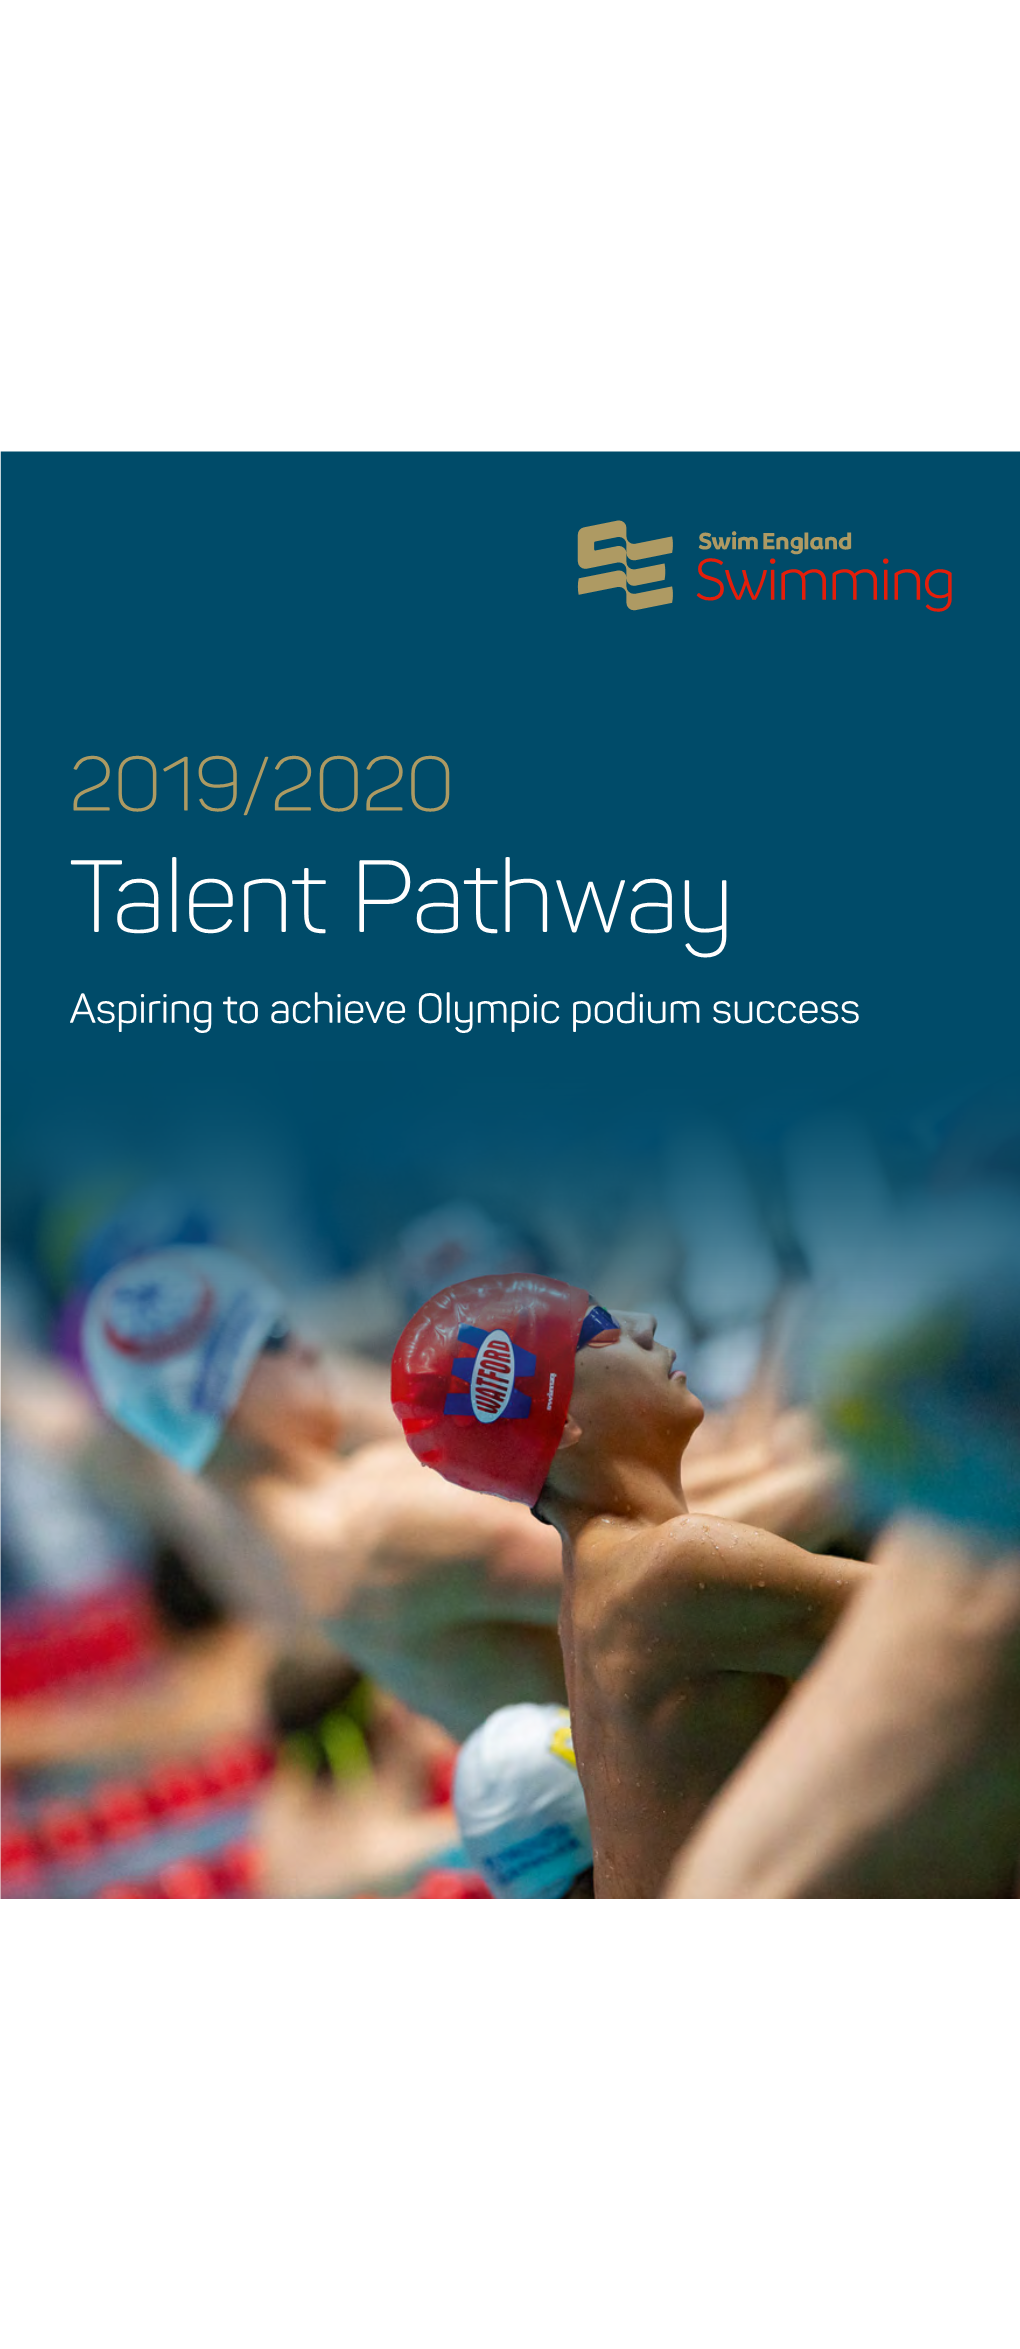 Talent Pathway Document